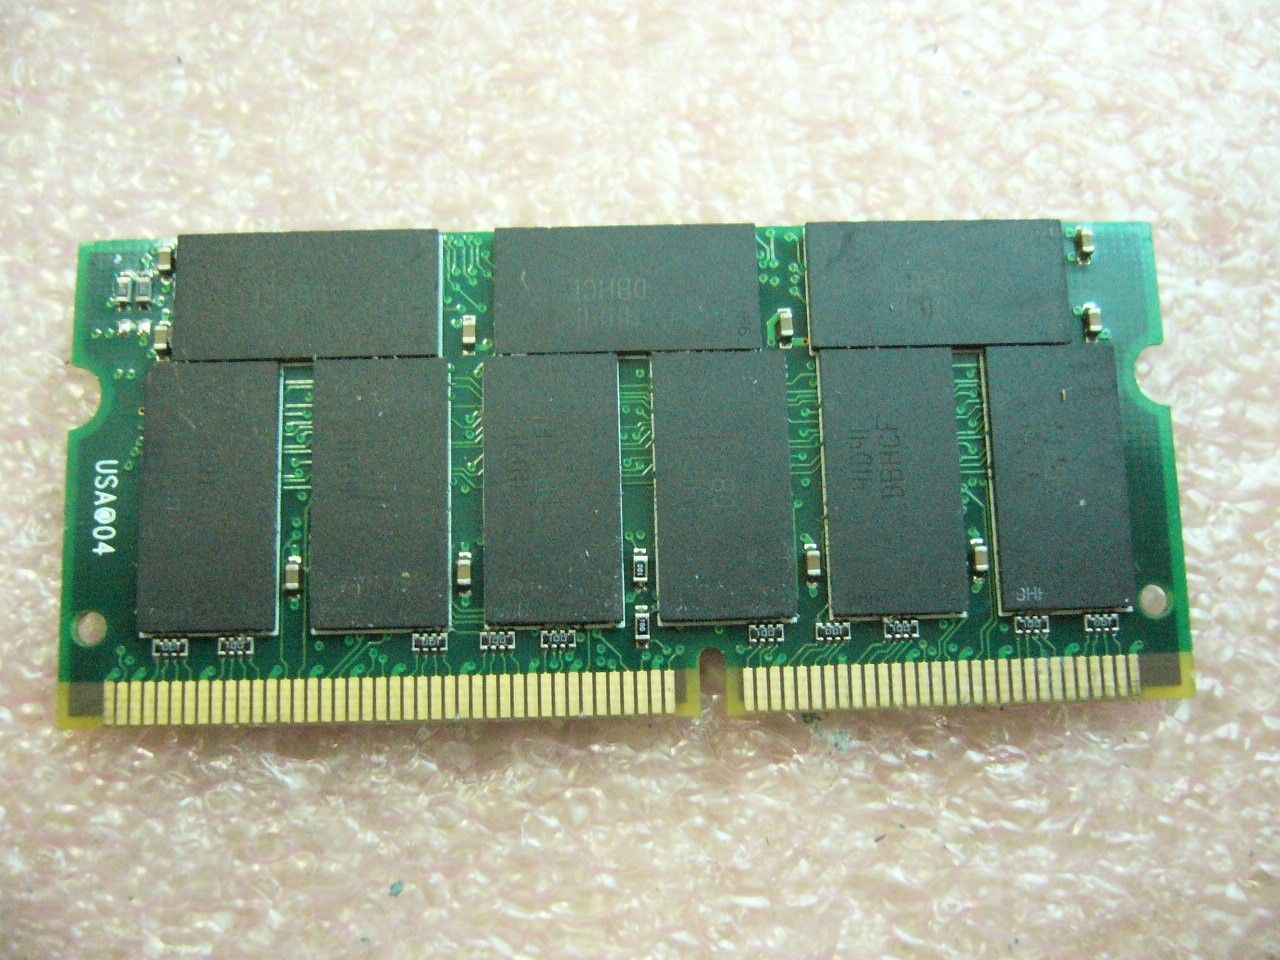 QTY 1x 512MB SDRAM PC133Mhz ECC laptop memory stick VM474S6555E-GAM - Click Image to Close